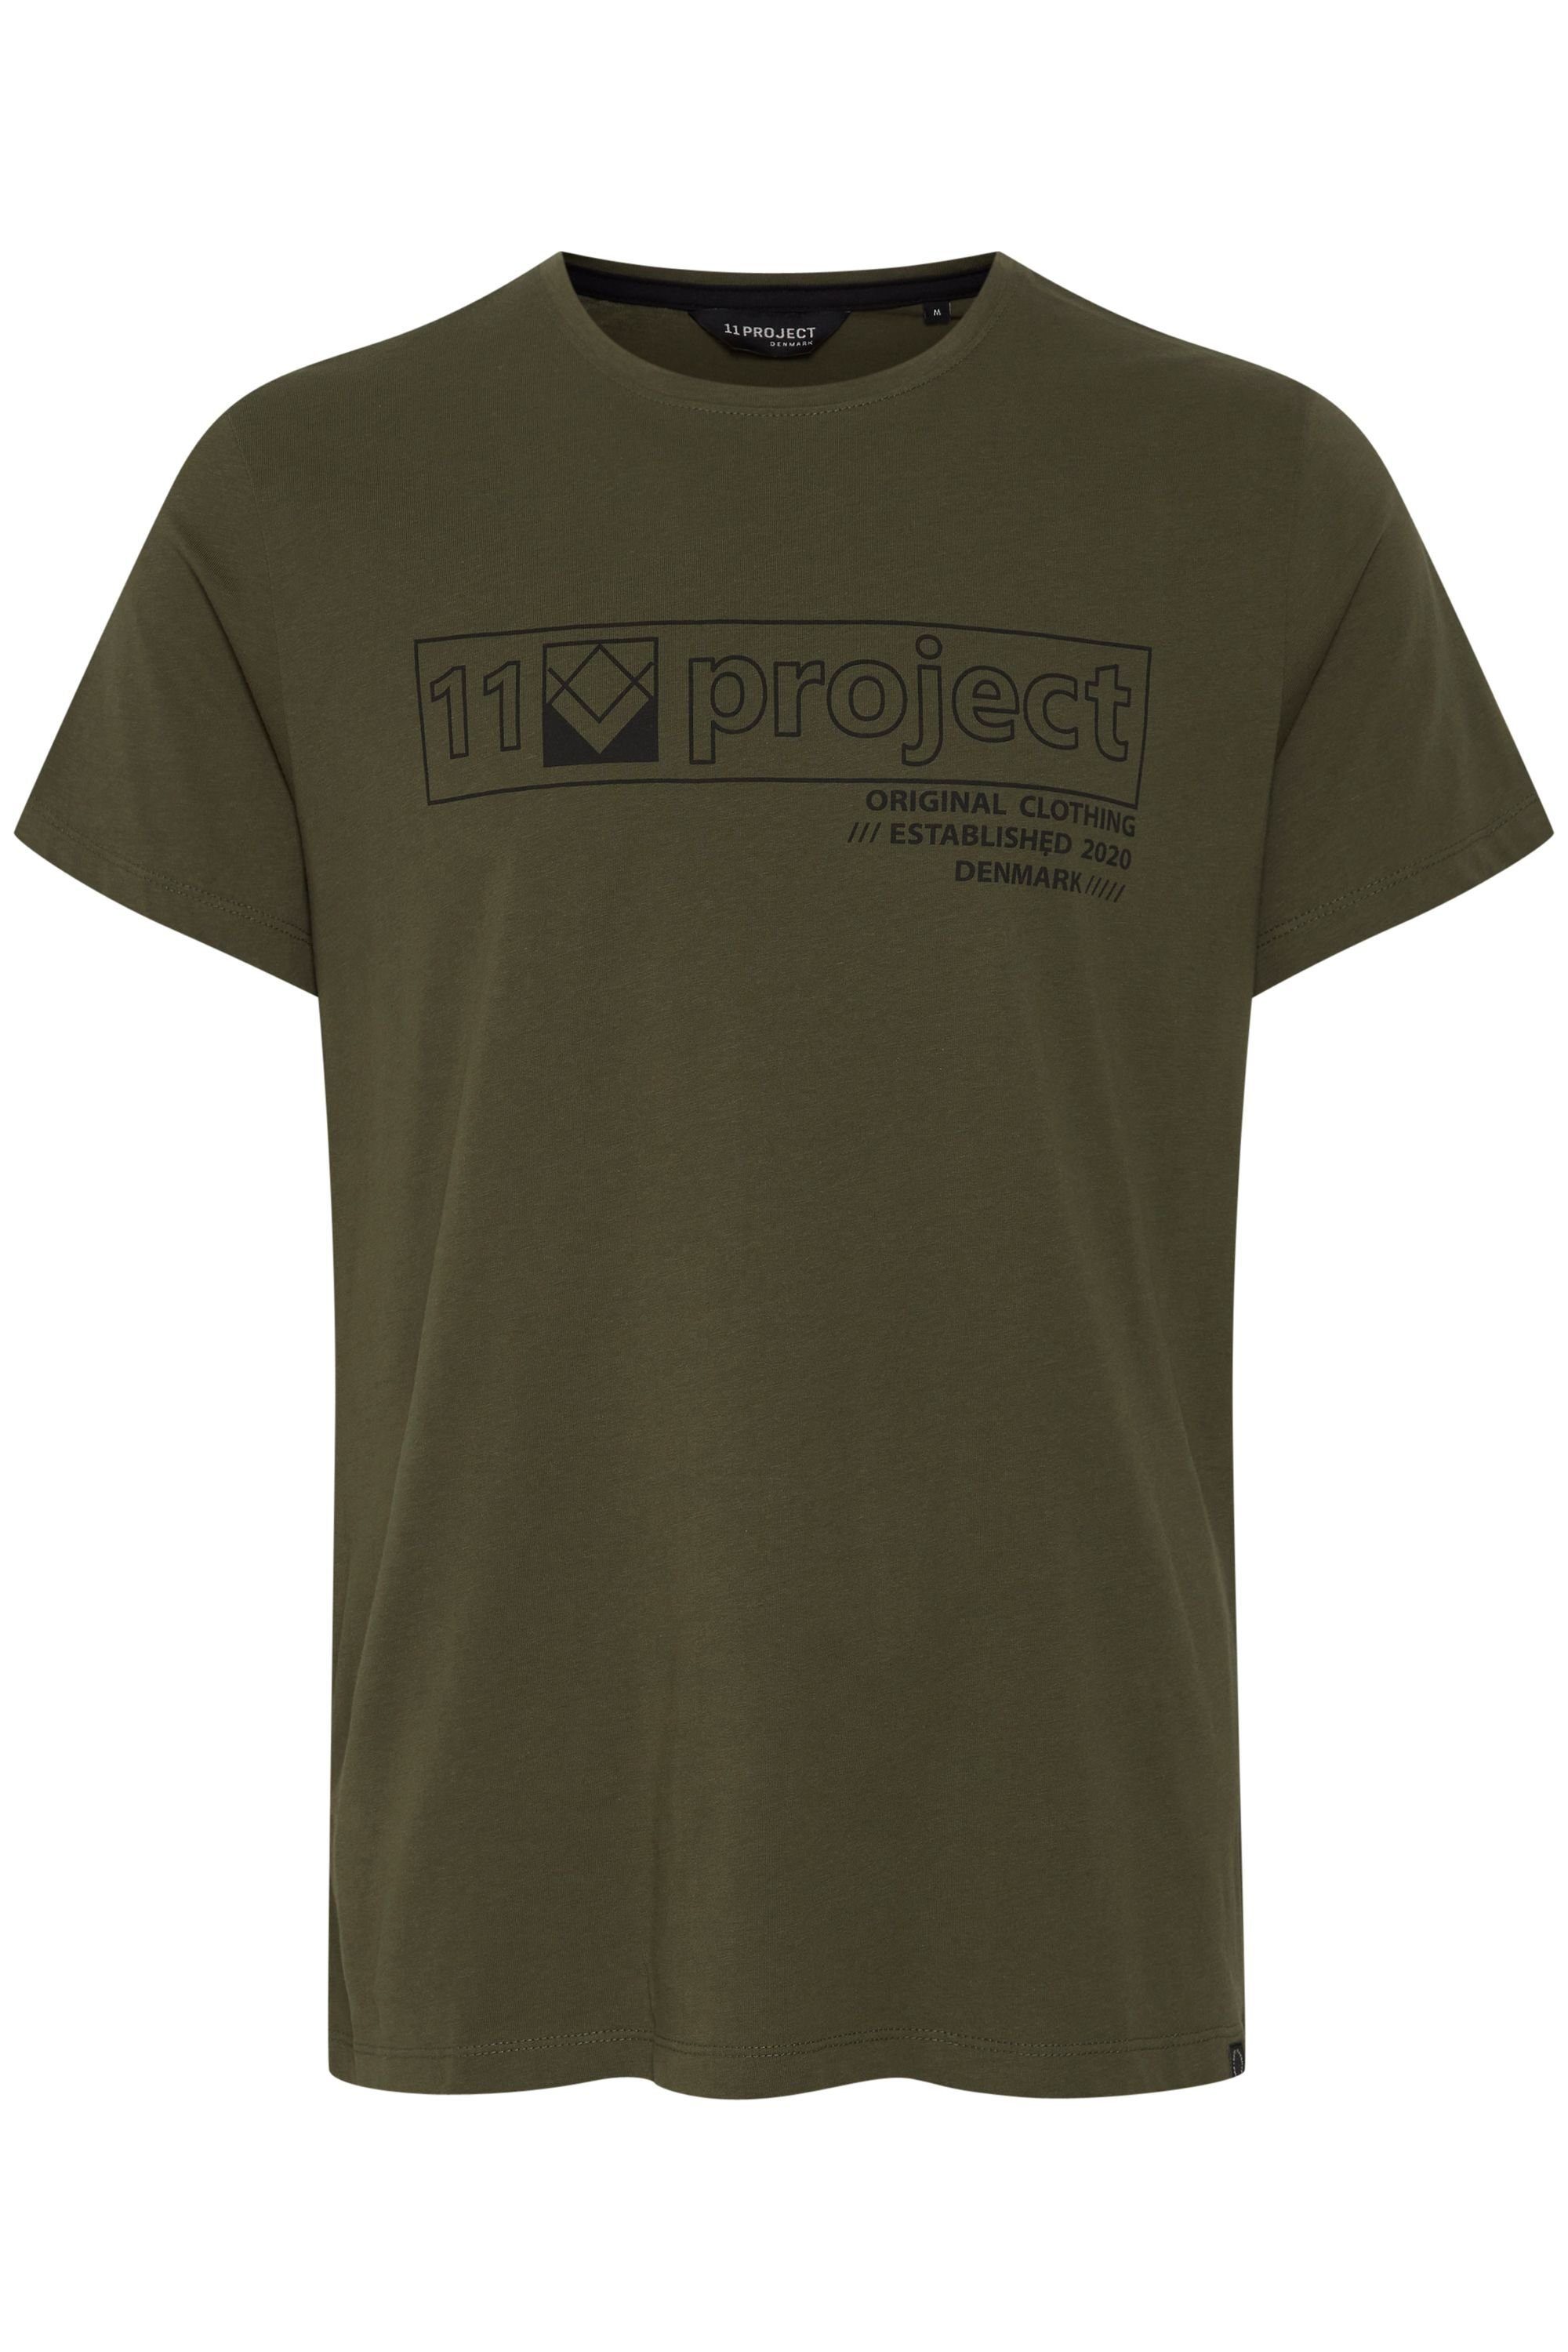 T-Shirt Project Night Project Olive 11 11 PRMattis